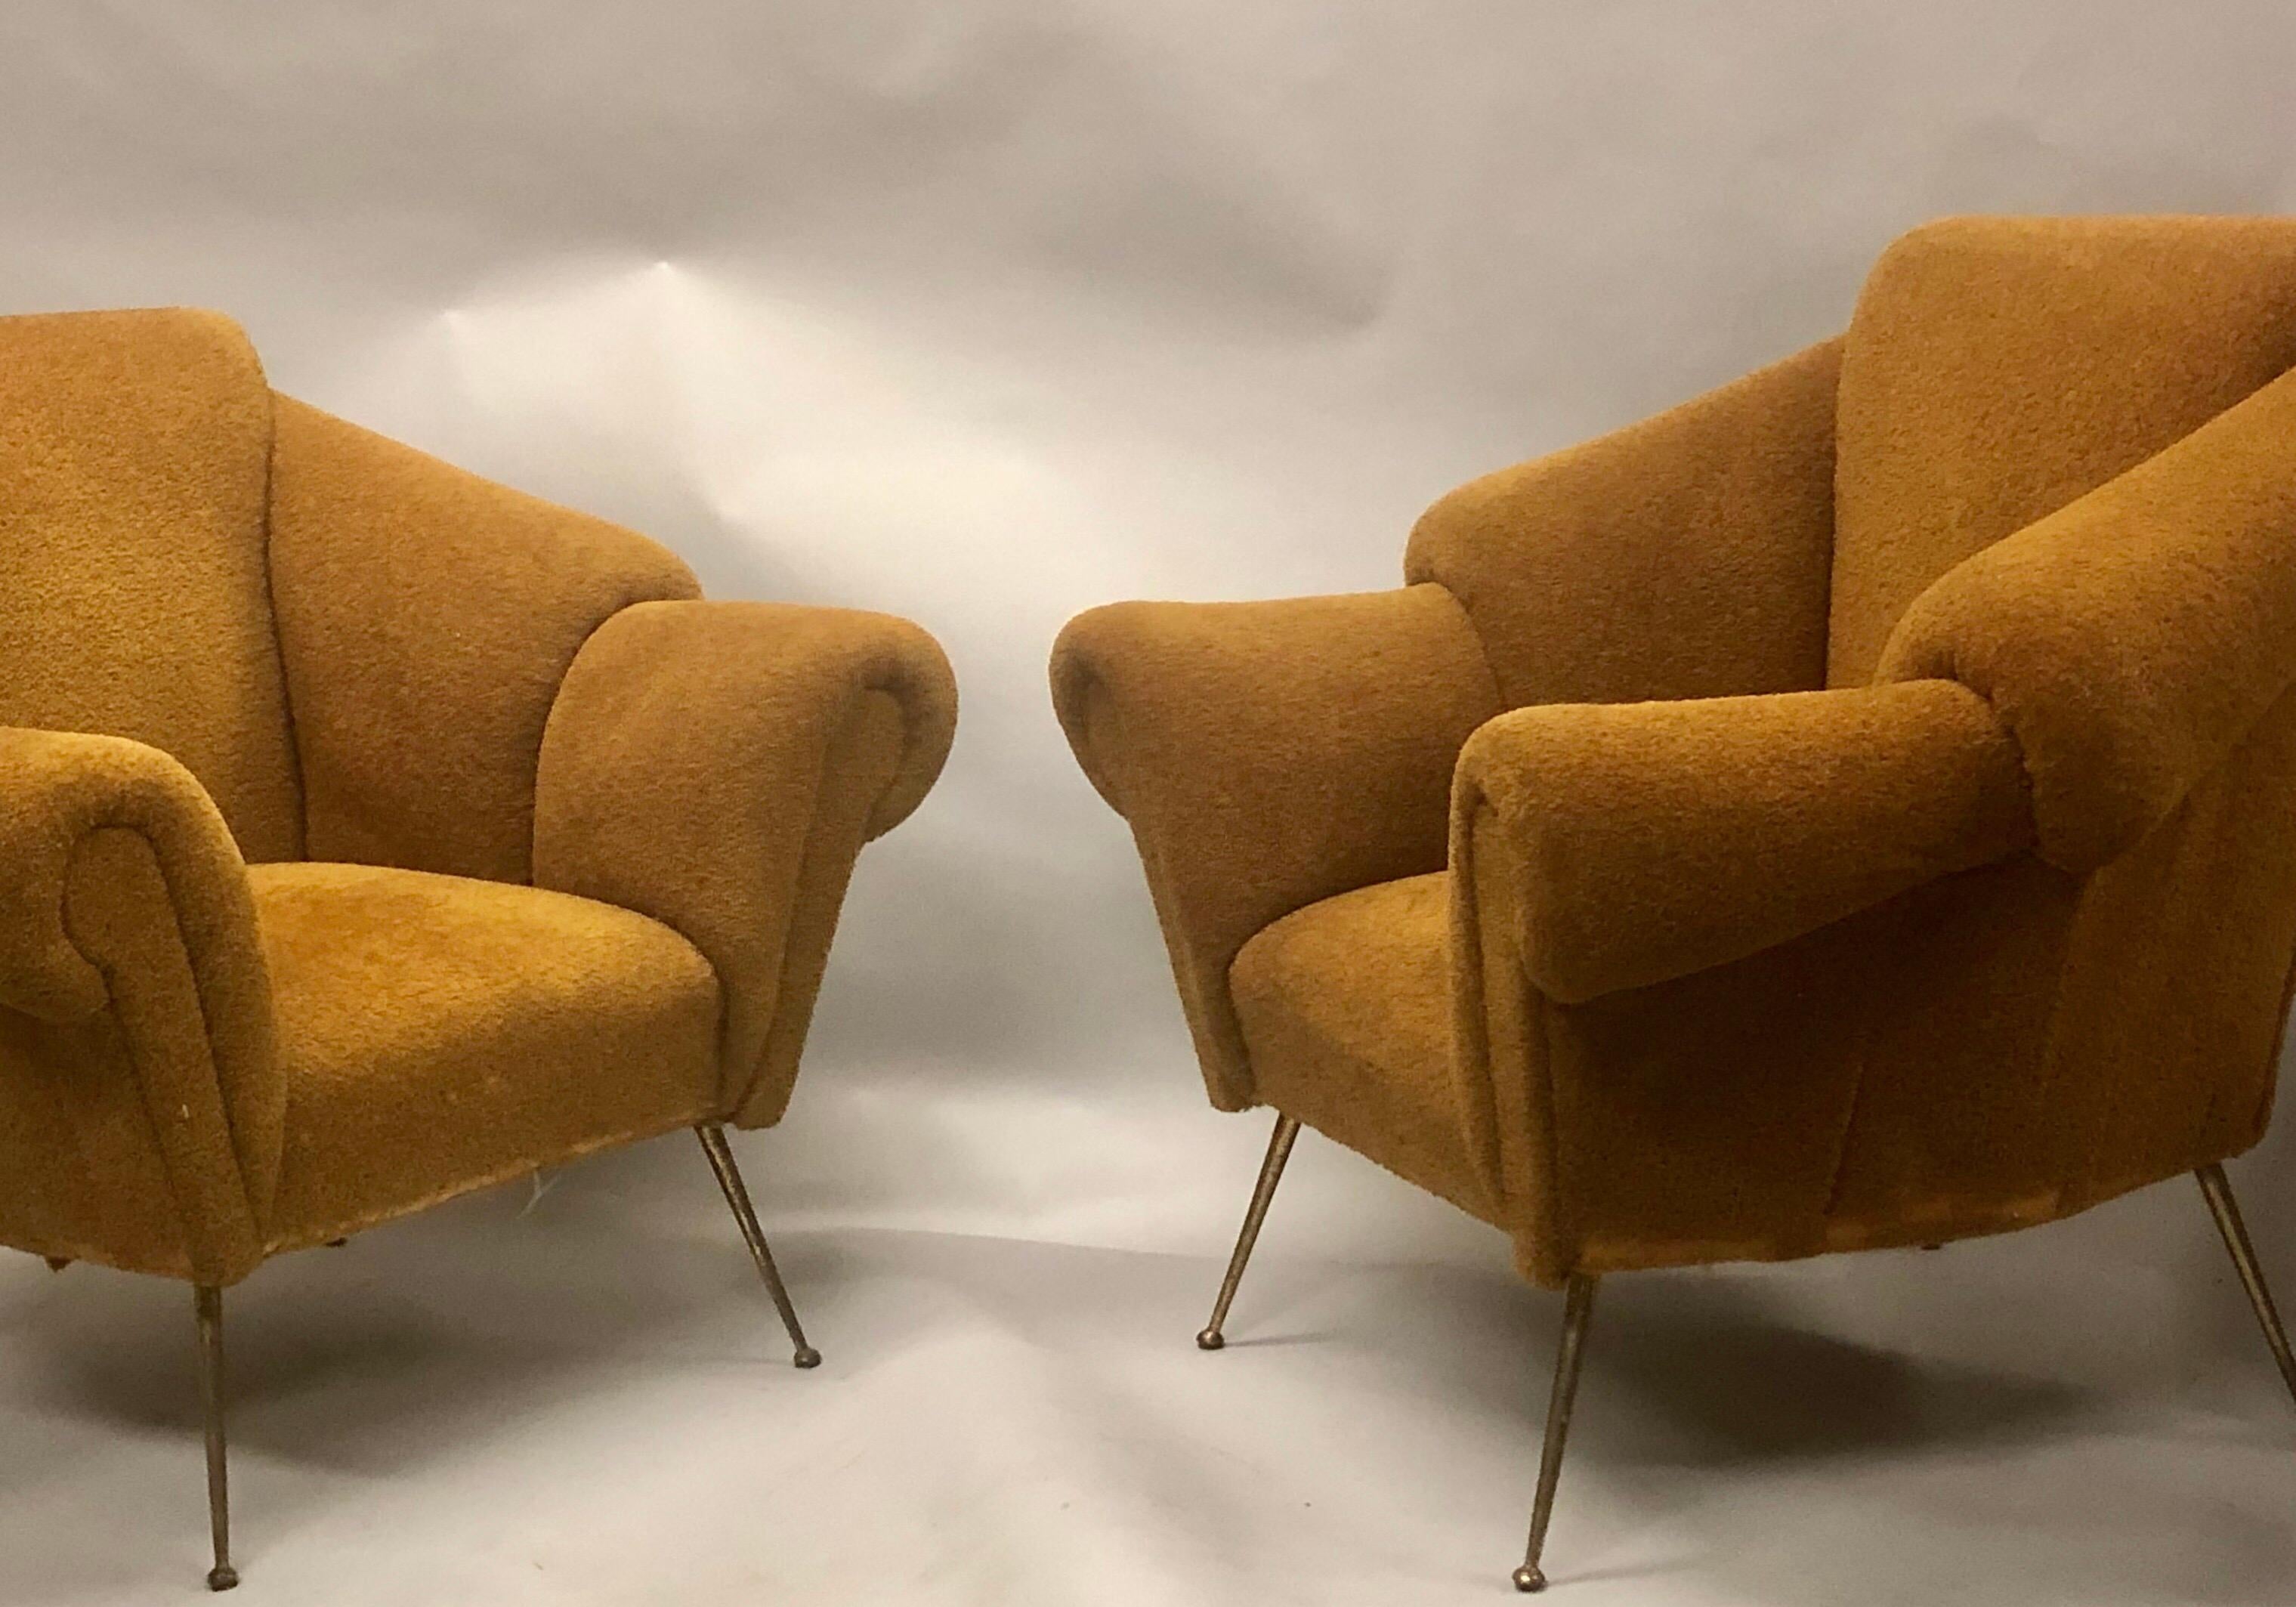 20th Century Pair of Italian Futurist Lounge Chairs / Armchairs Attributed to Giacomo Balla